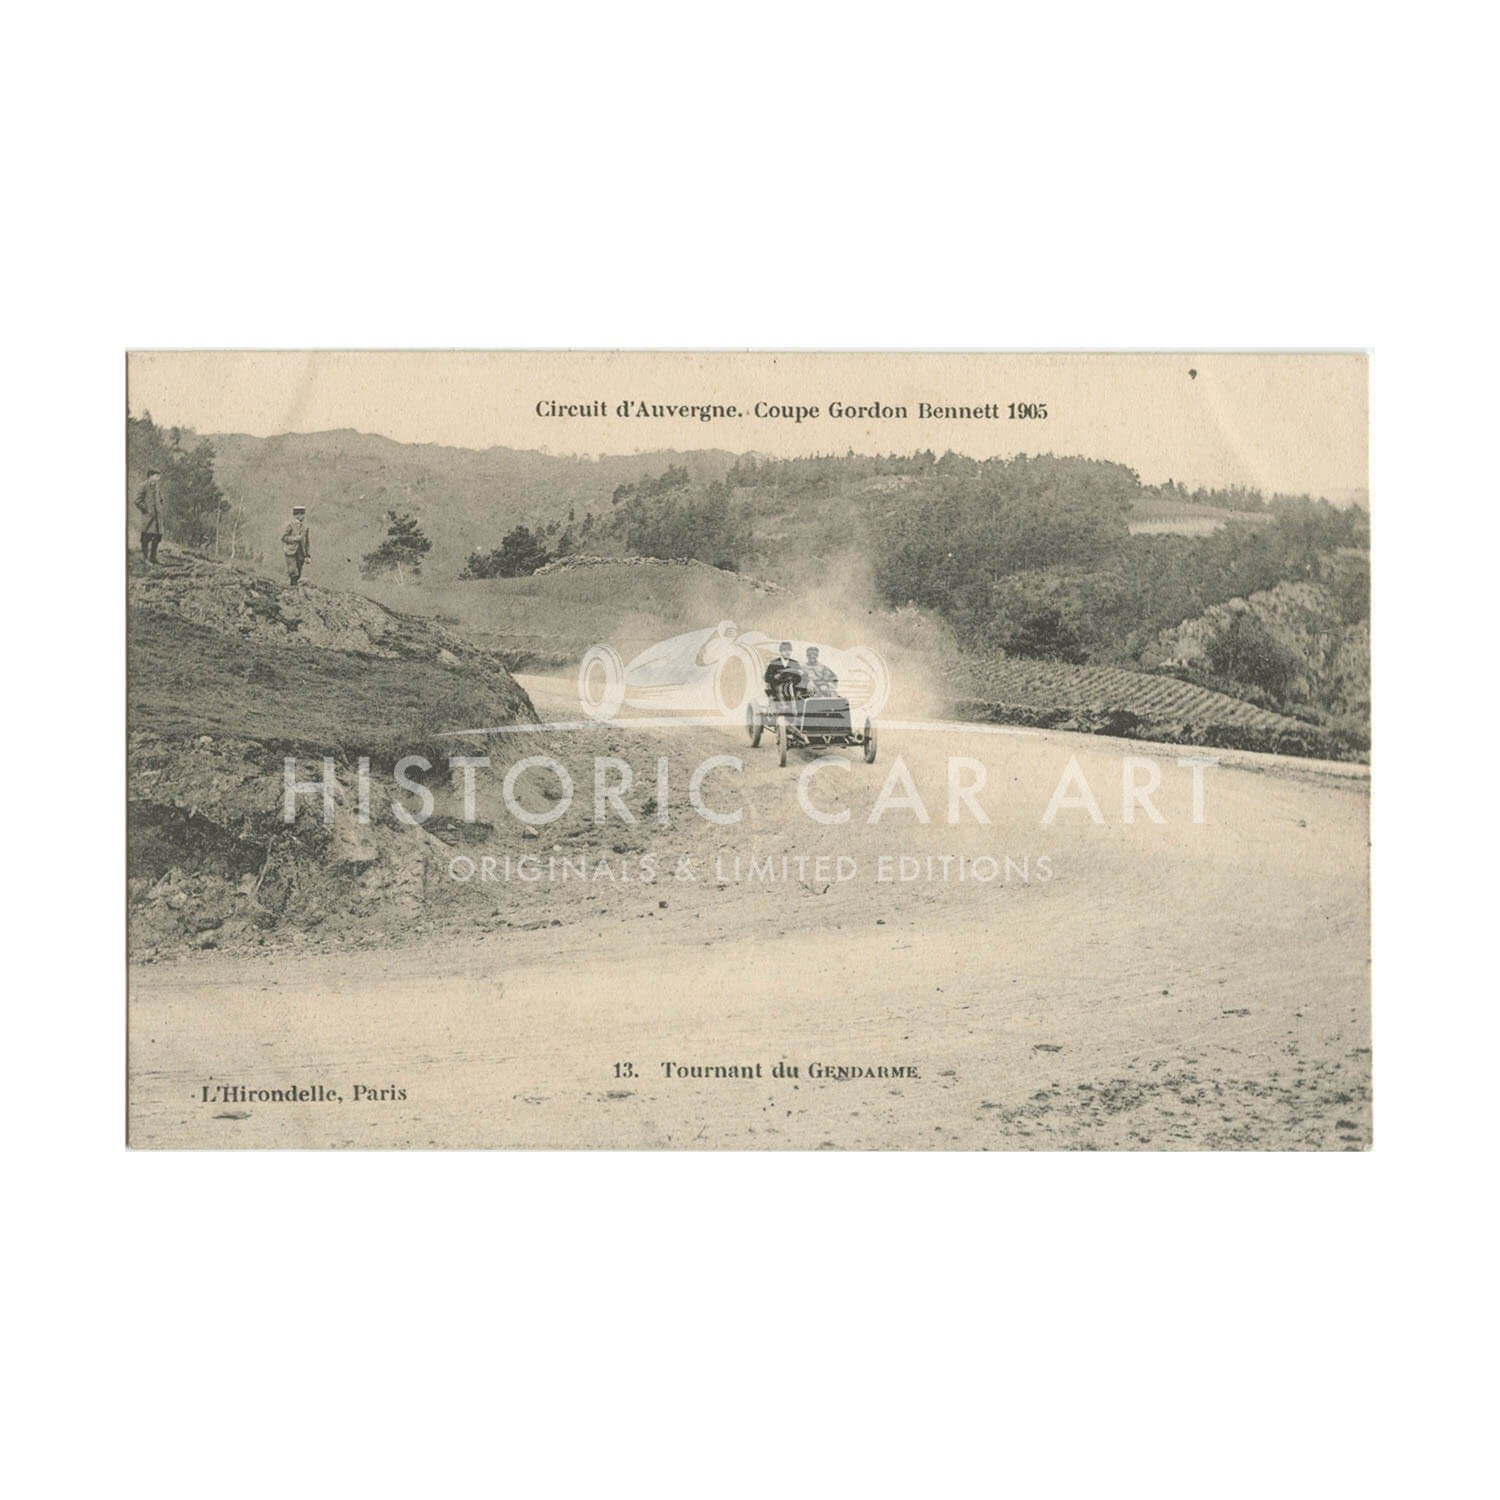 French | 1905 of Circuit d'Auvergne | Gordon Bennett Cup #2 | Vintage Postcard